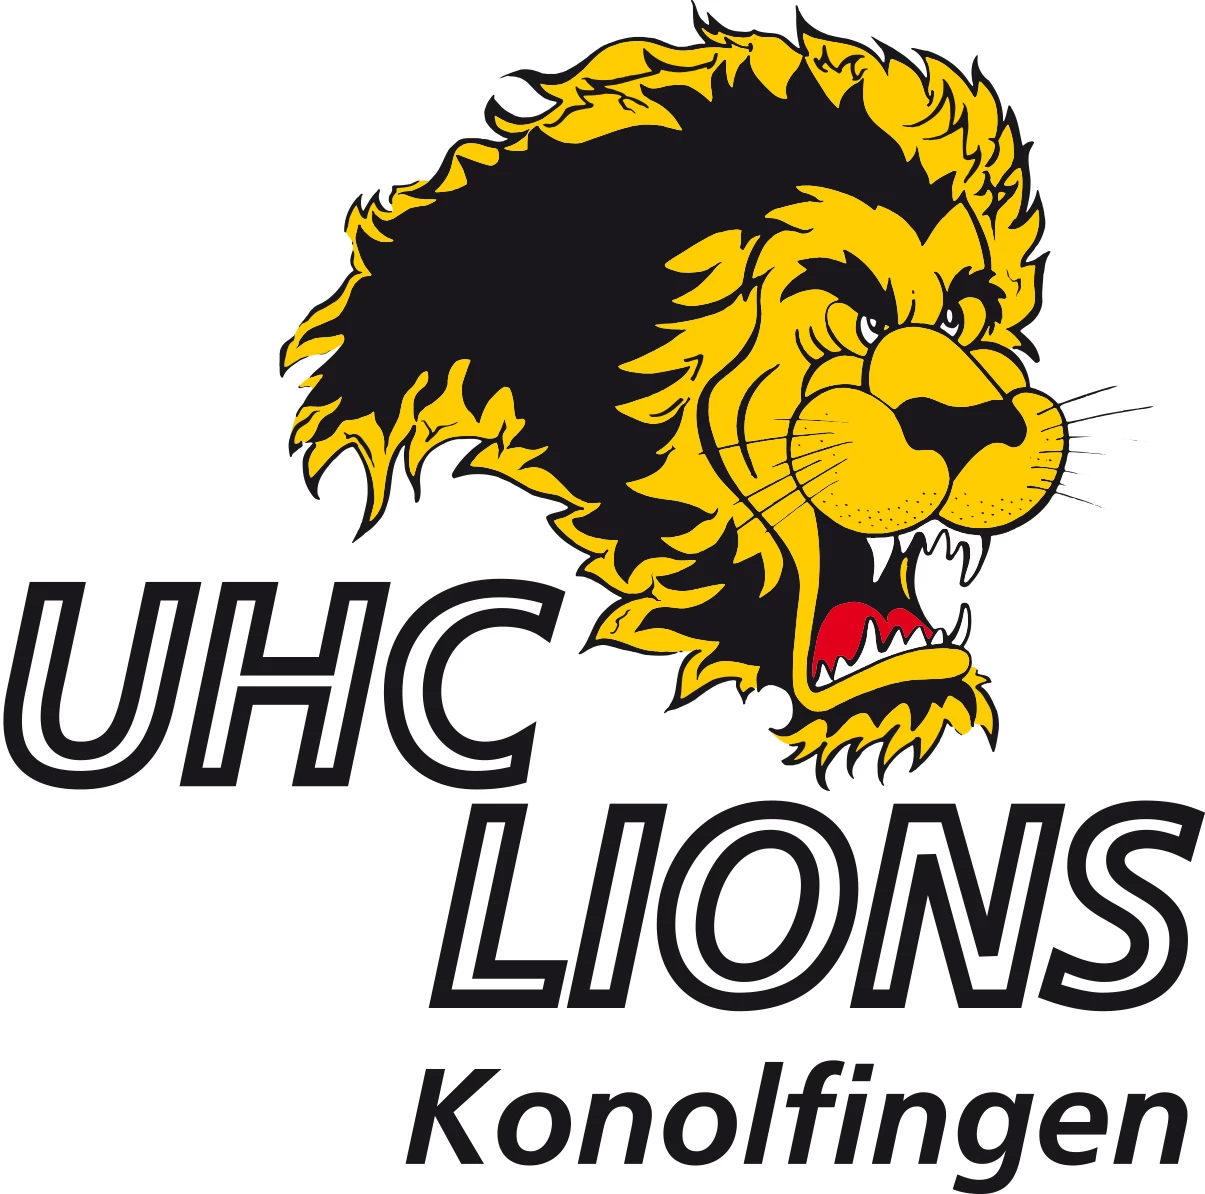 UHC Lions